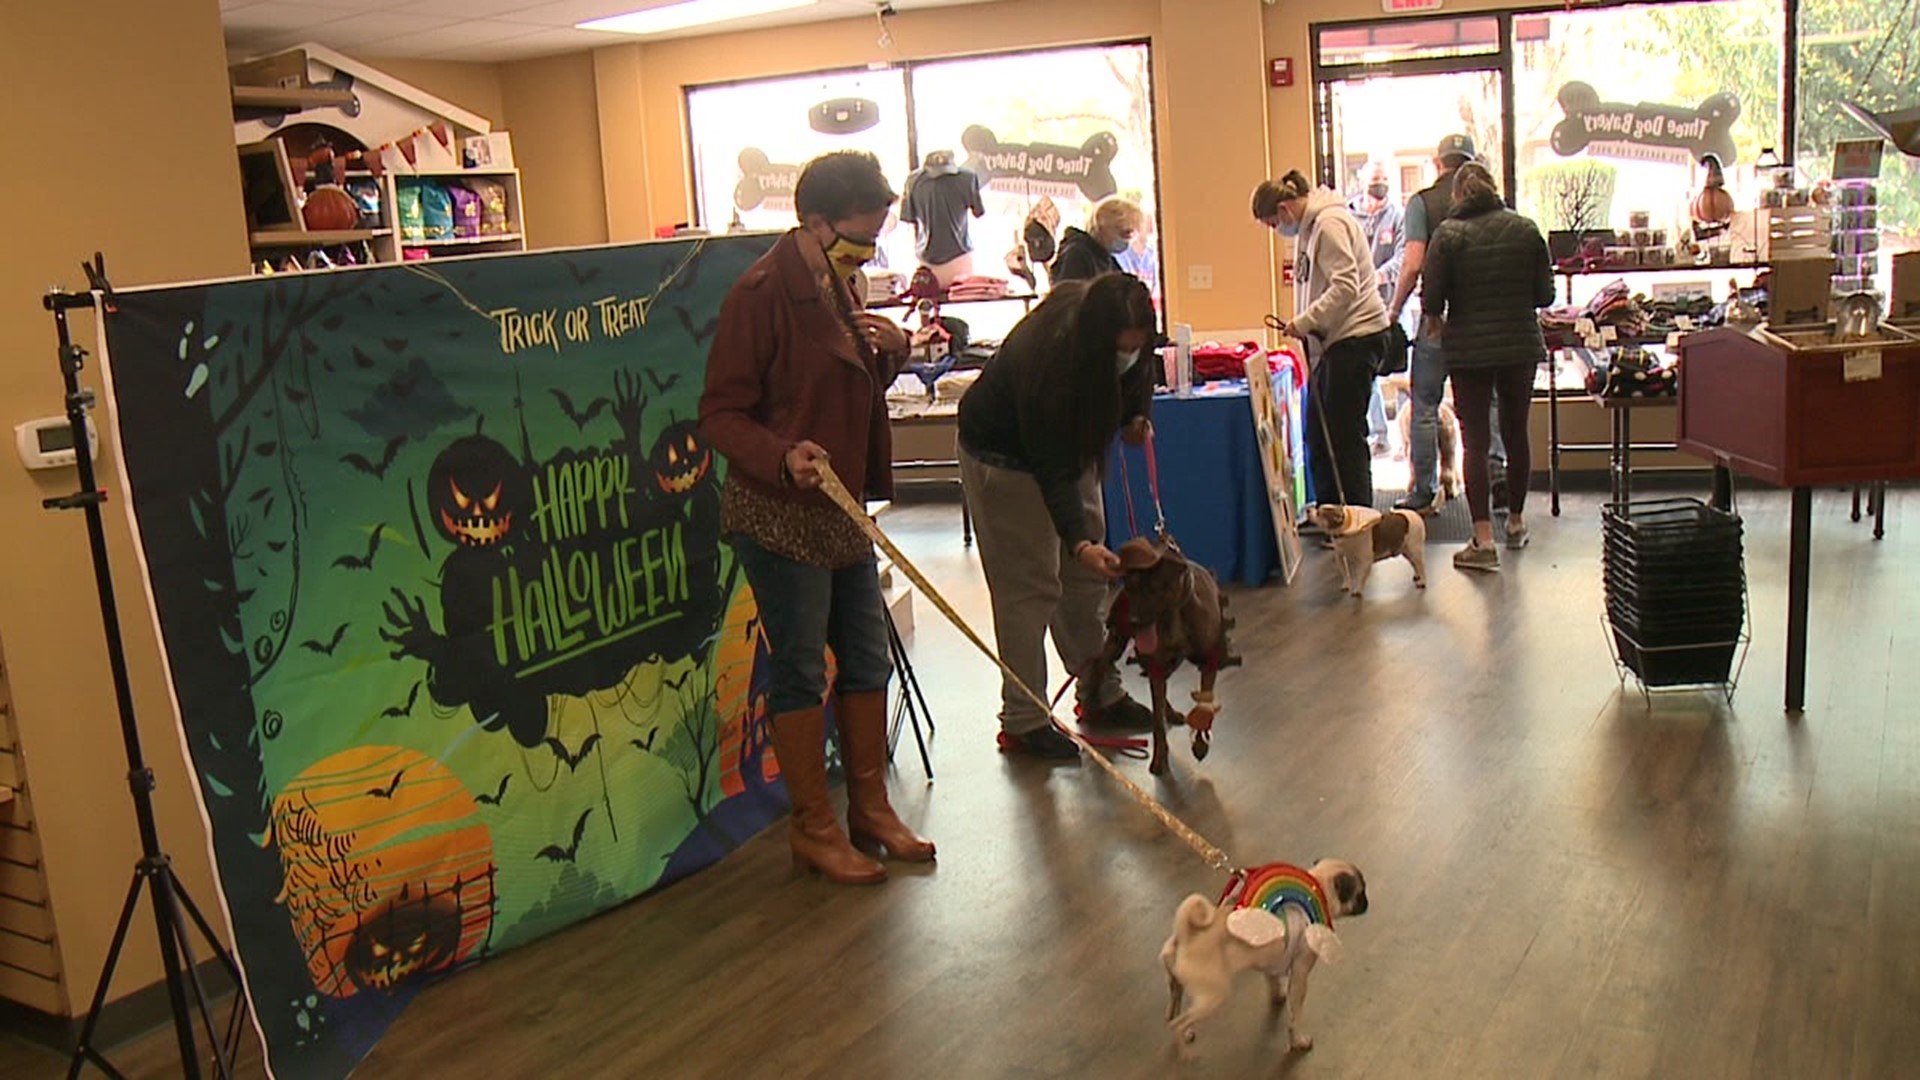 Three Dog Bakery hosted the fundraiser to help raise money for Blue Chip Farm Animal Refuge.